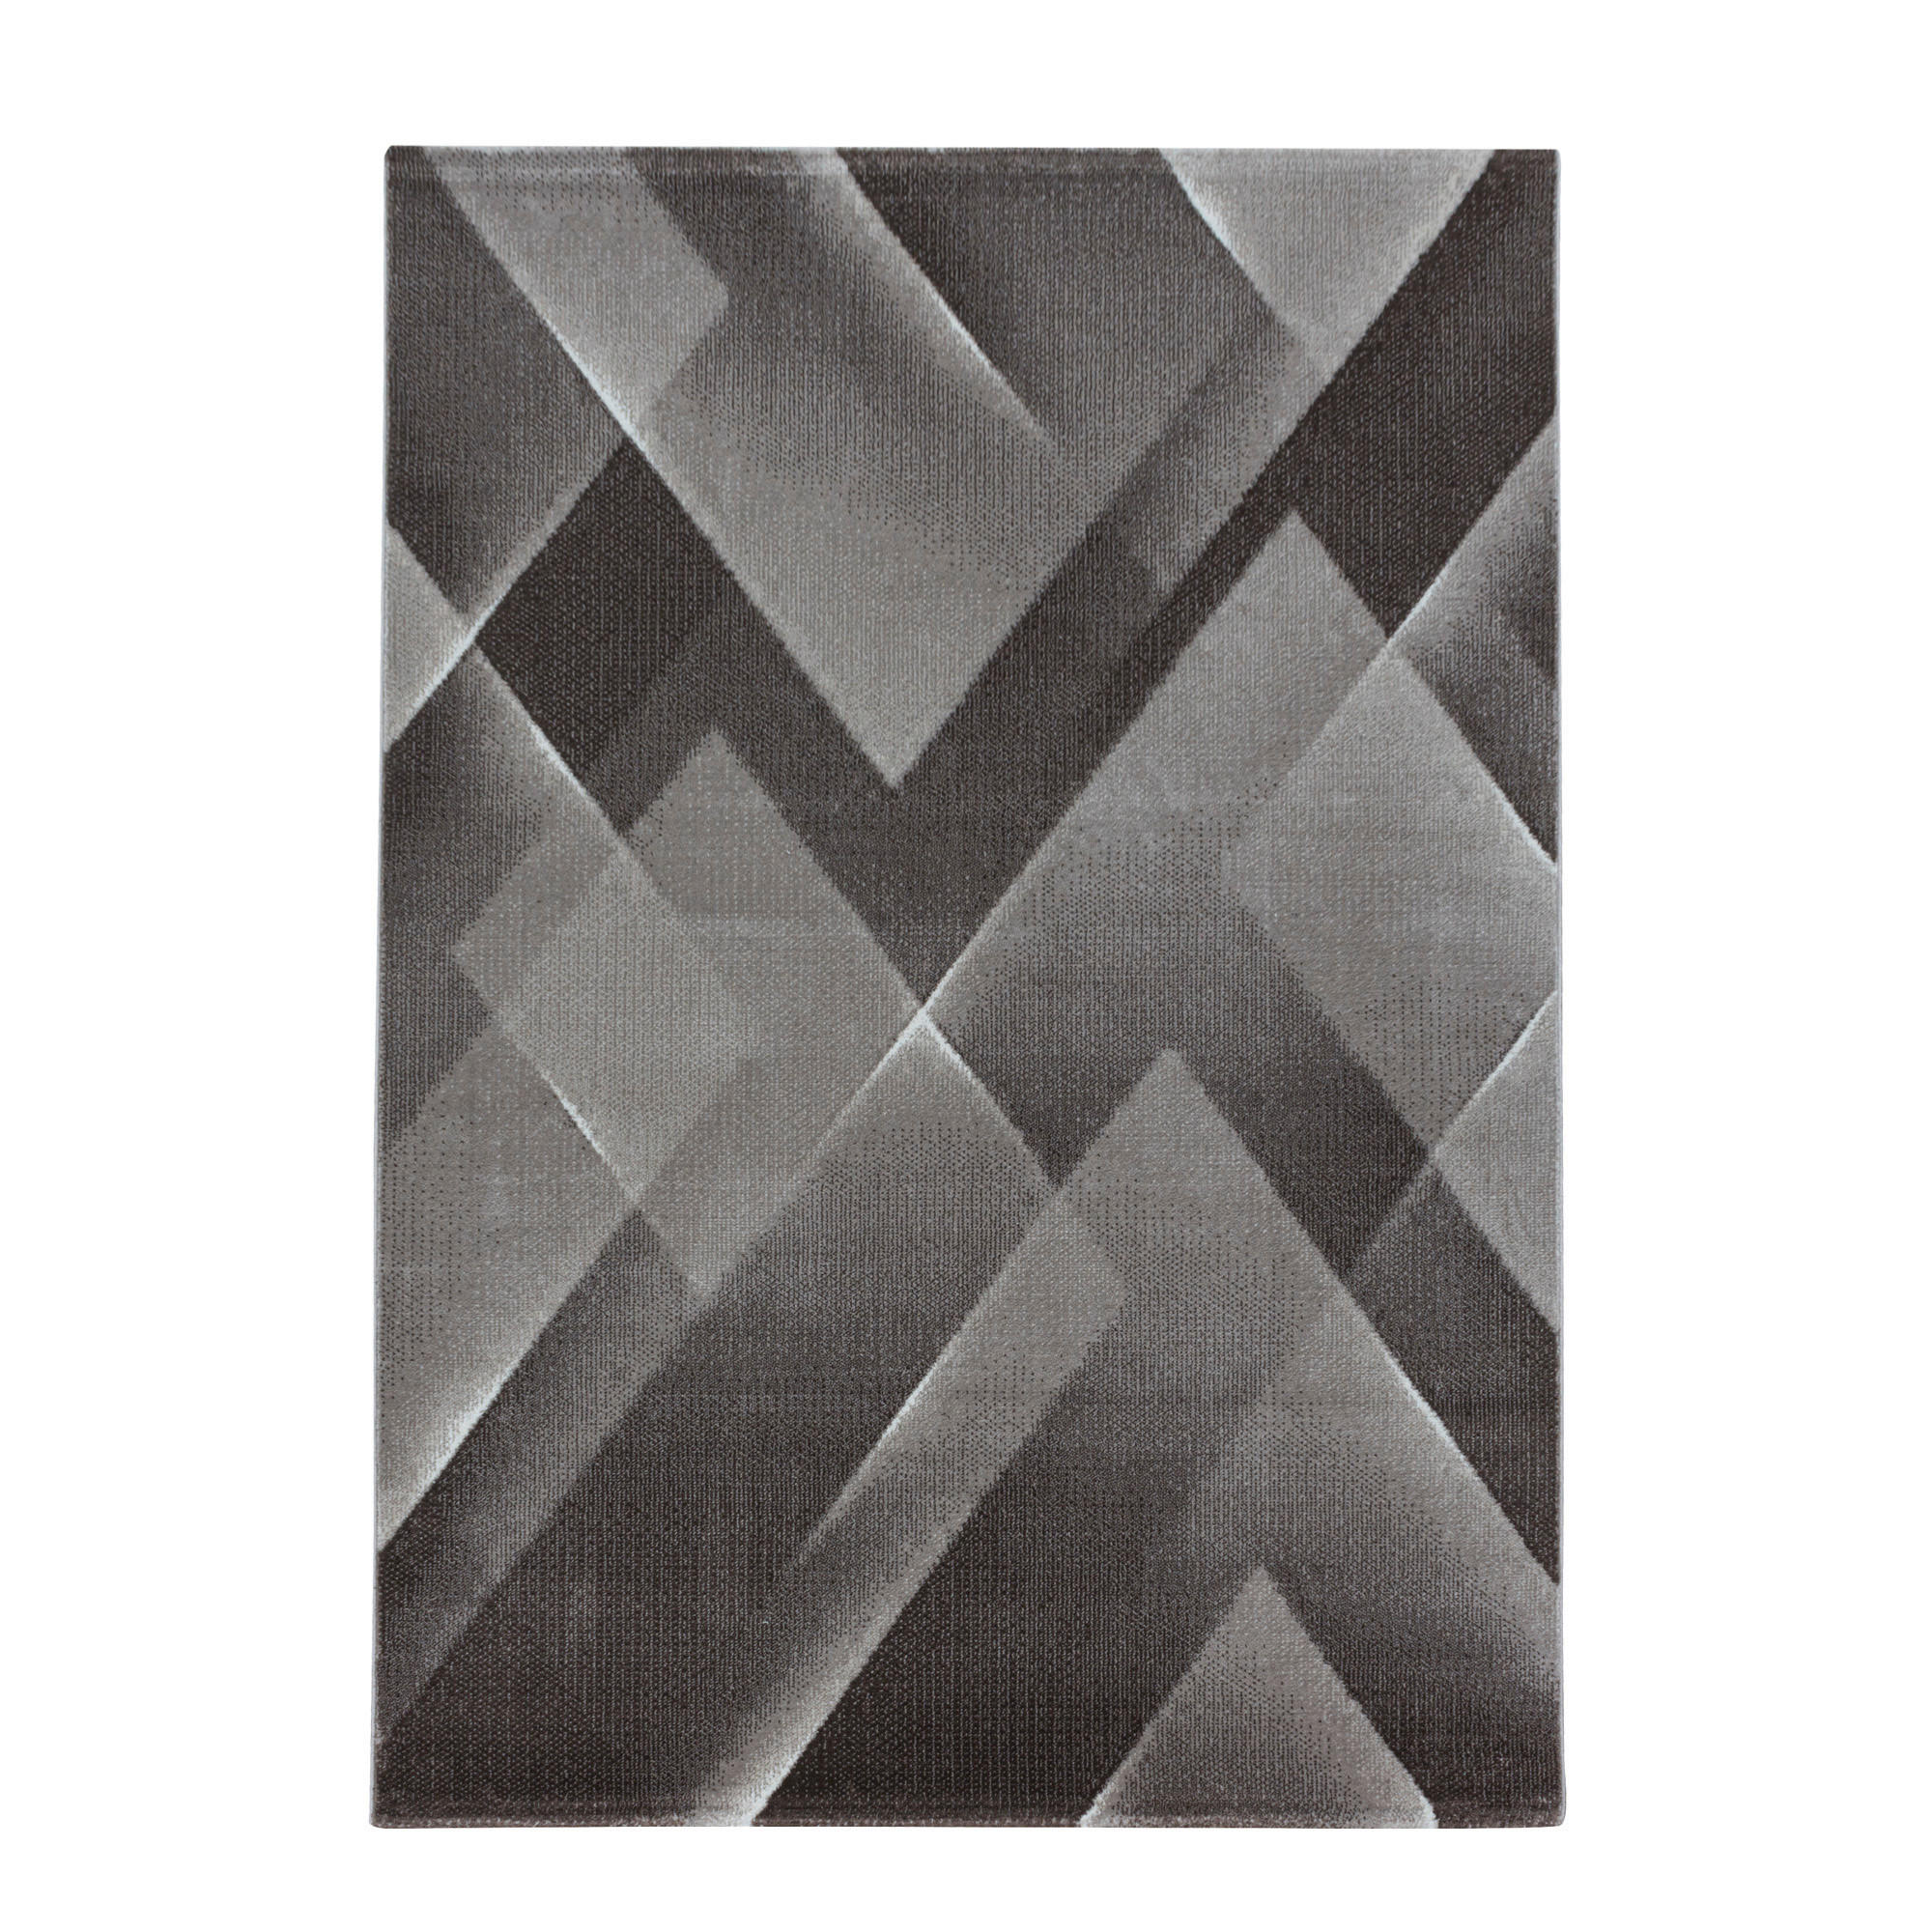 WEBTEPPICH  200/290 cm  Braun   - Braun, Design, Textil (200/290cm) - Novel